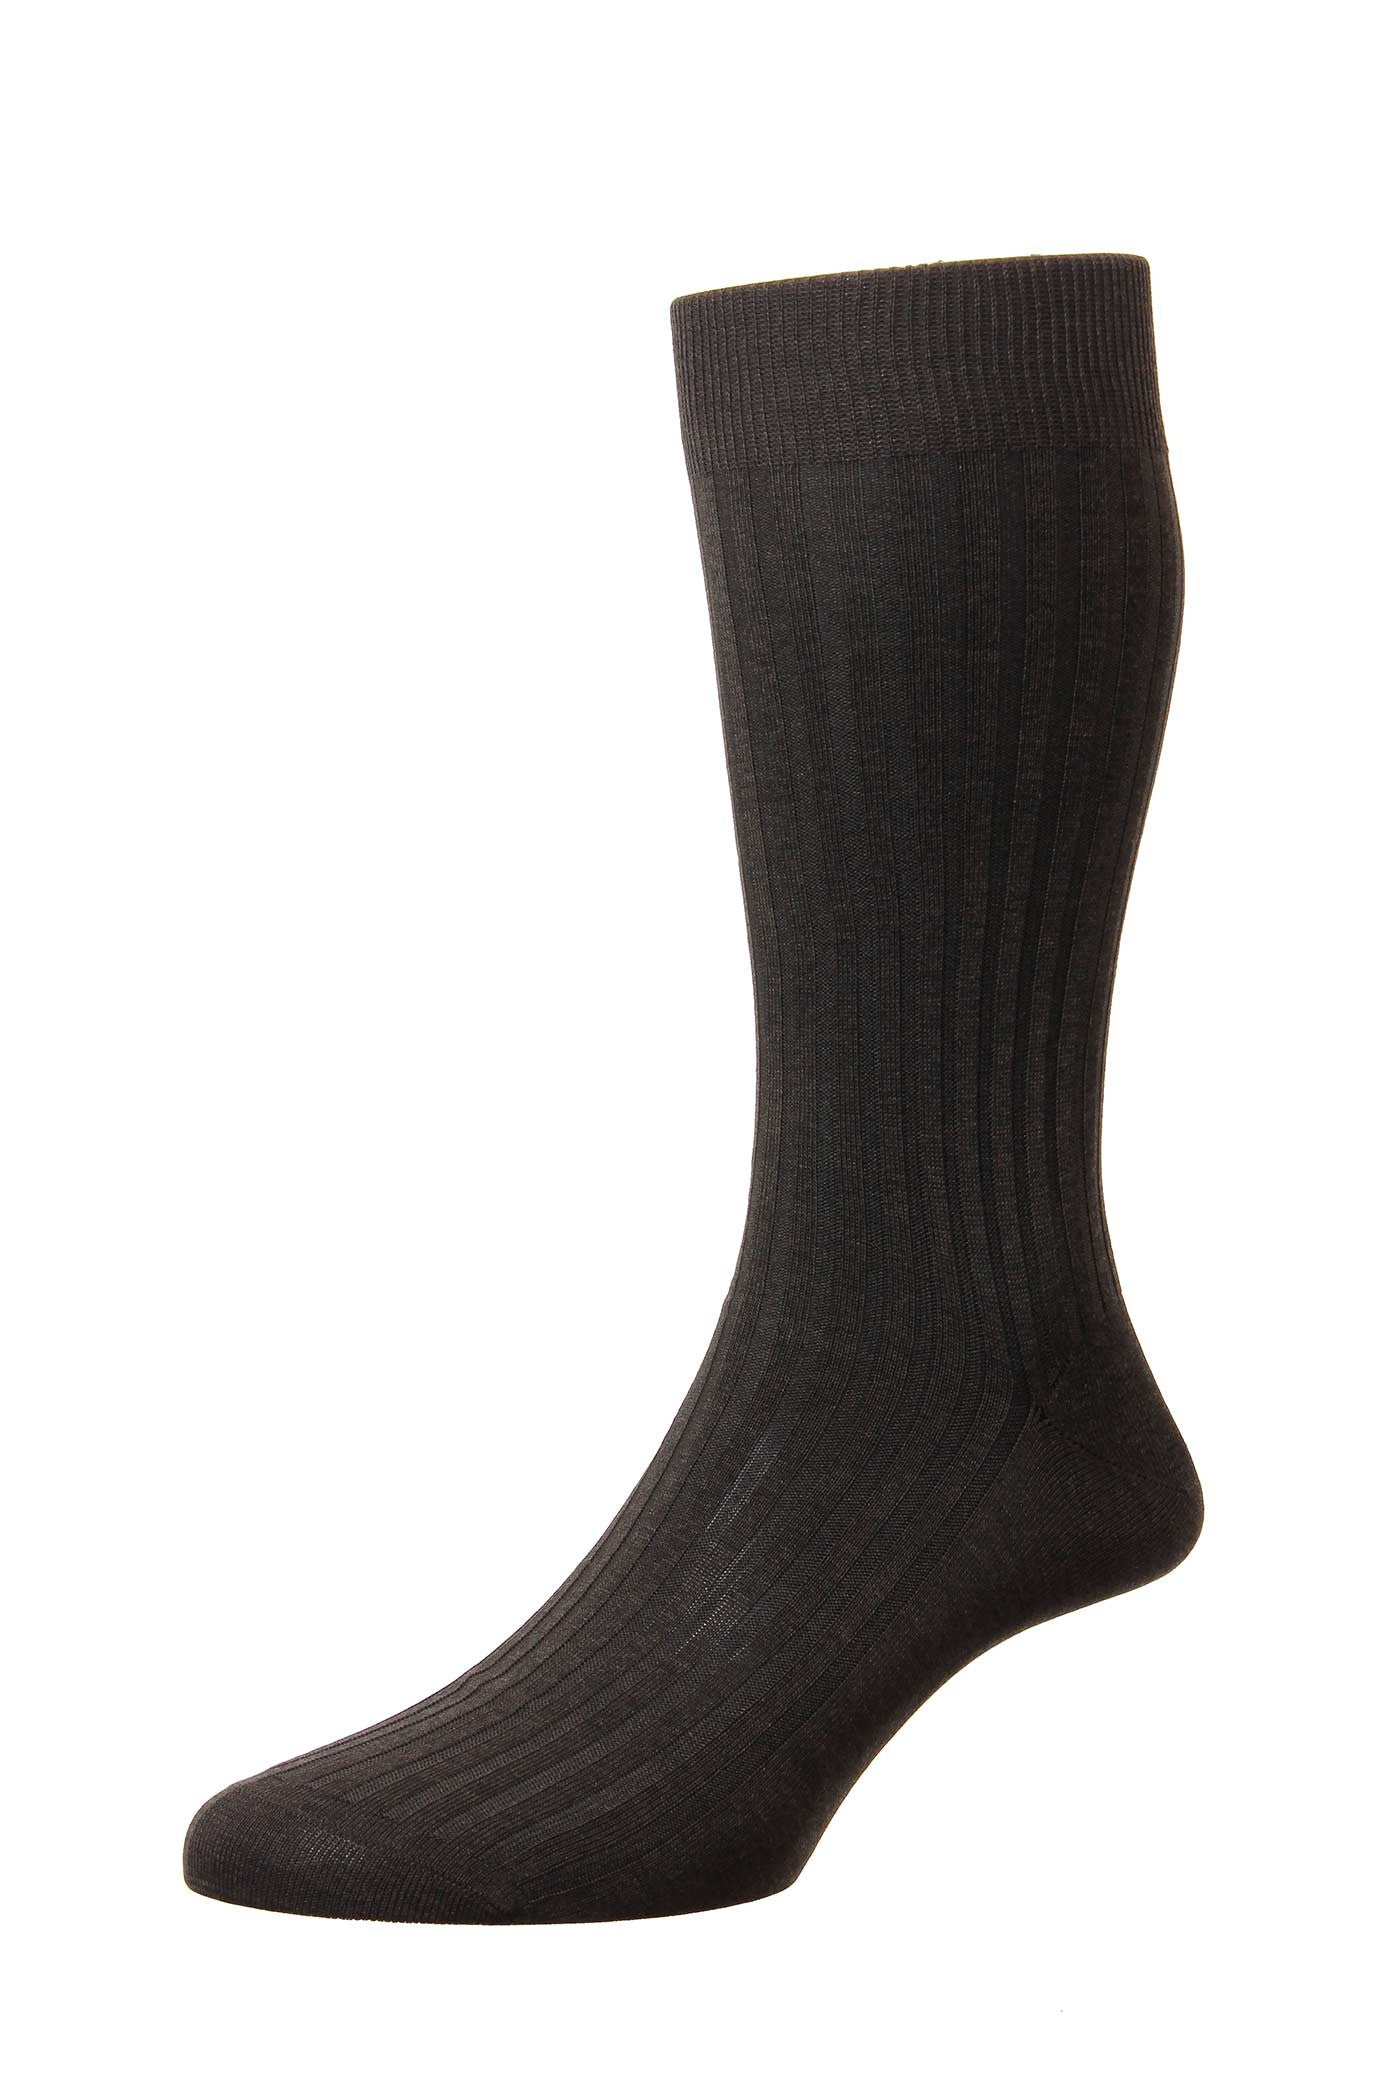 Men's Socks - Danvers (5614) 5x3 Rib Fil d'Ecosse / Cotton Lisle - DARK BROWN MIX